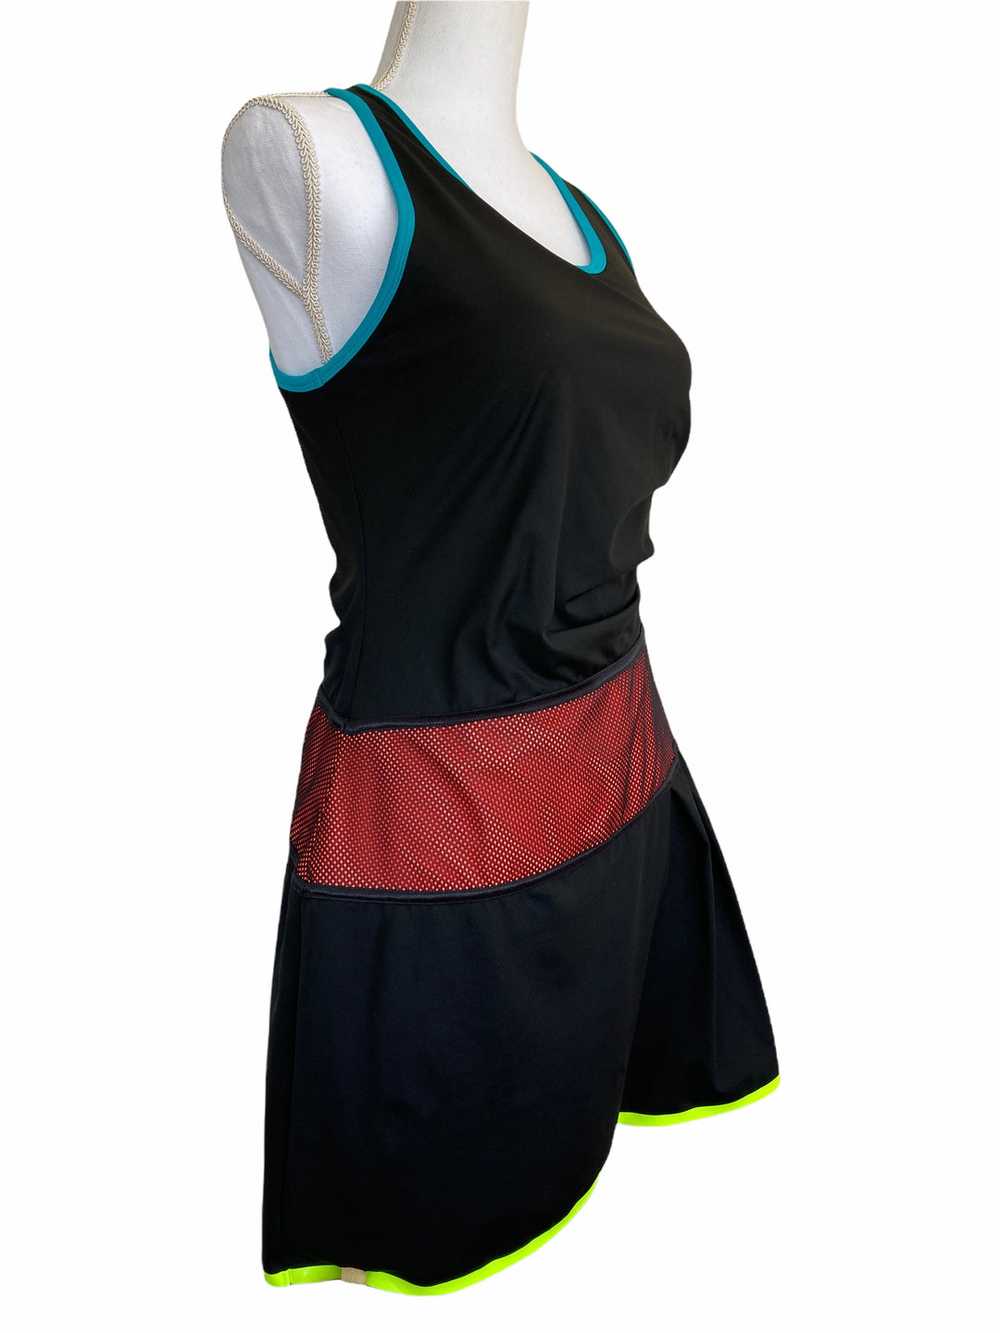 Monreal Tennis Dress L - image 3